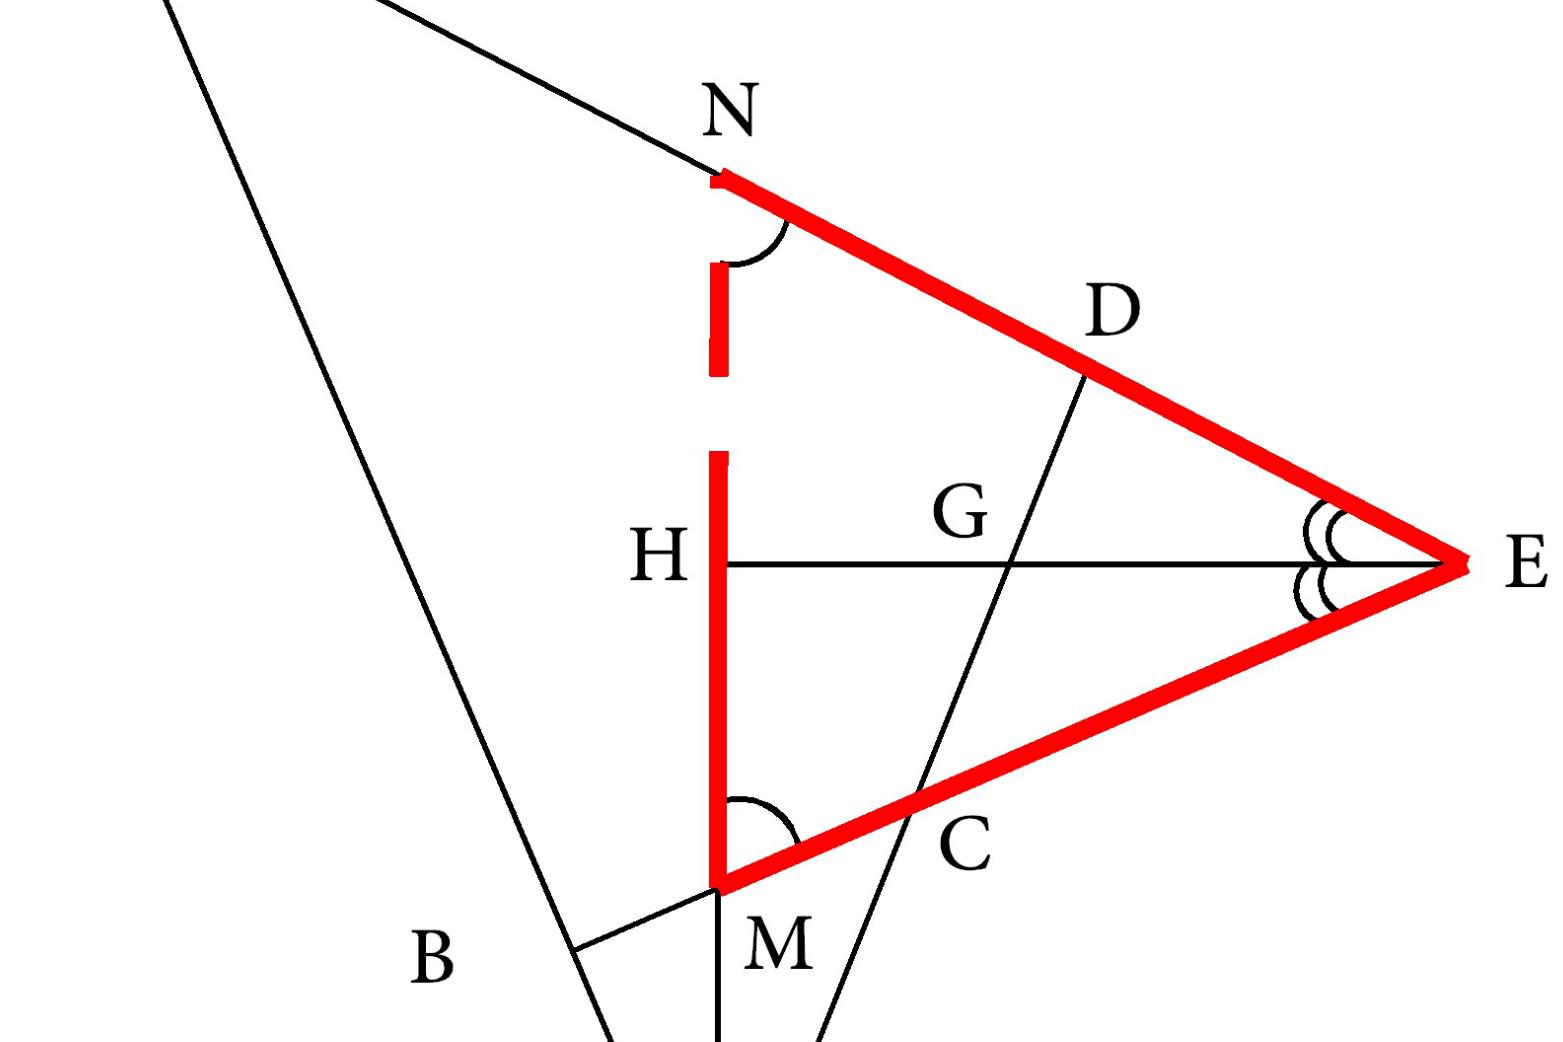 PPT - 1. 每个角都有（ ）条边，（ ）个顶点。 2. 从一个（ ）起，用尺子向不同的方向画（ ）条射线，就画成了一个角。 3. 判断一个角是不是直角，可以用（ ）比一比 ...